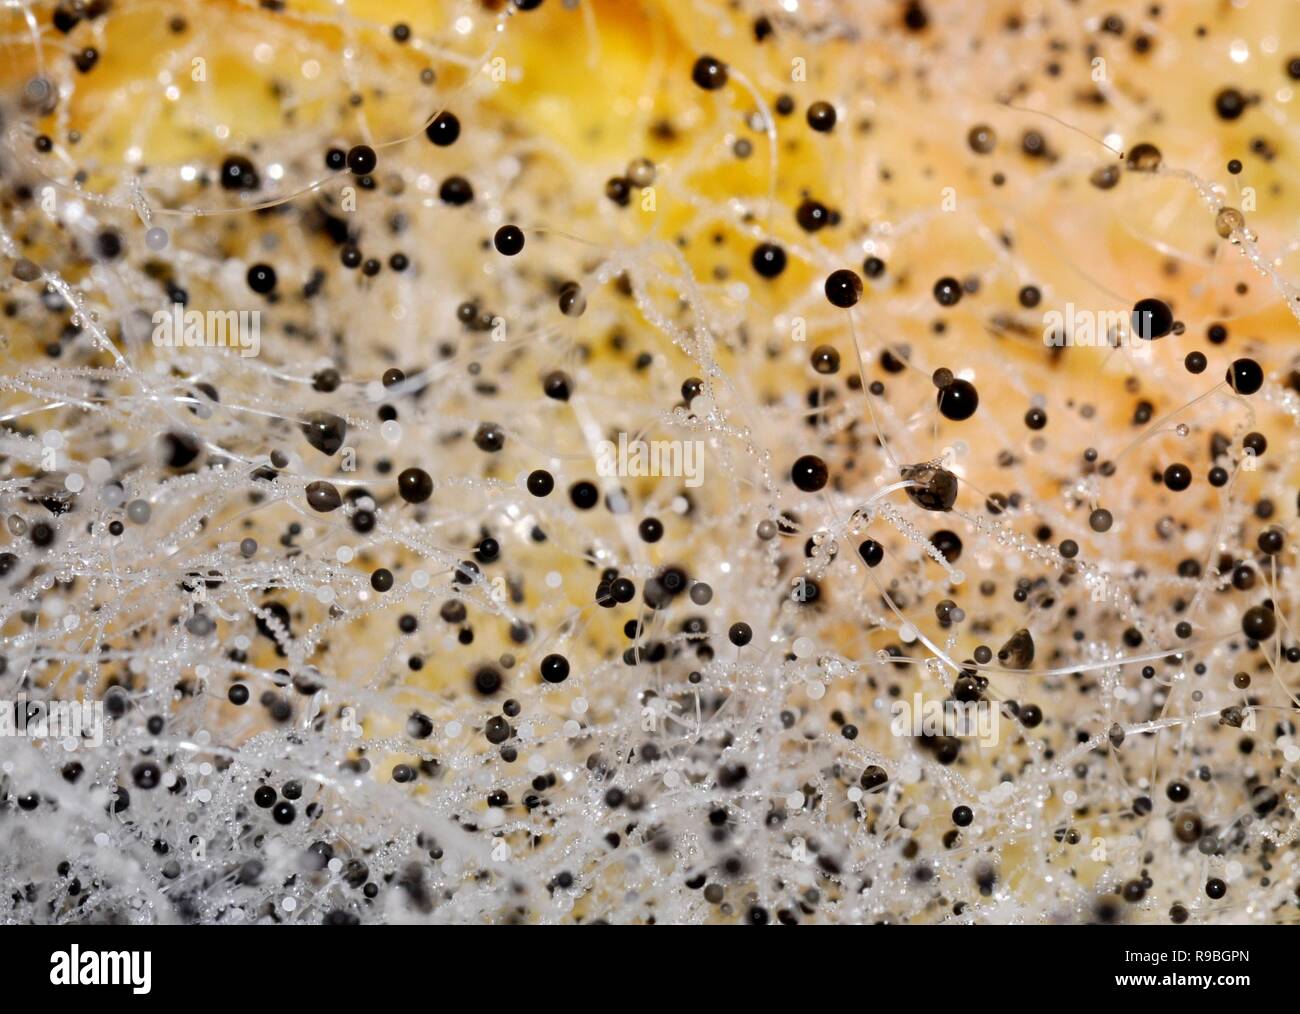 Closeup on decomposing fungi Rhizopus mold growing on an orange Stock Photo